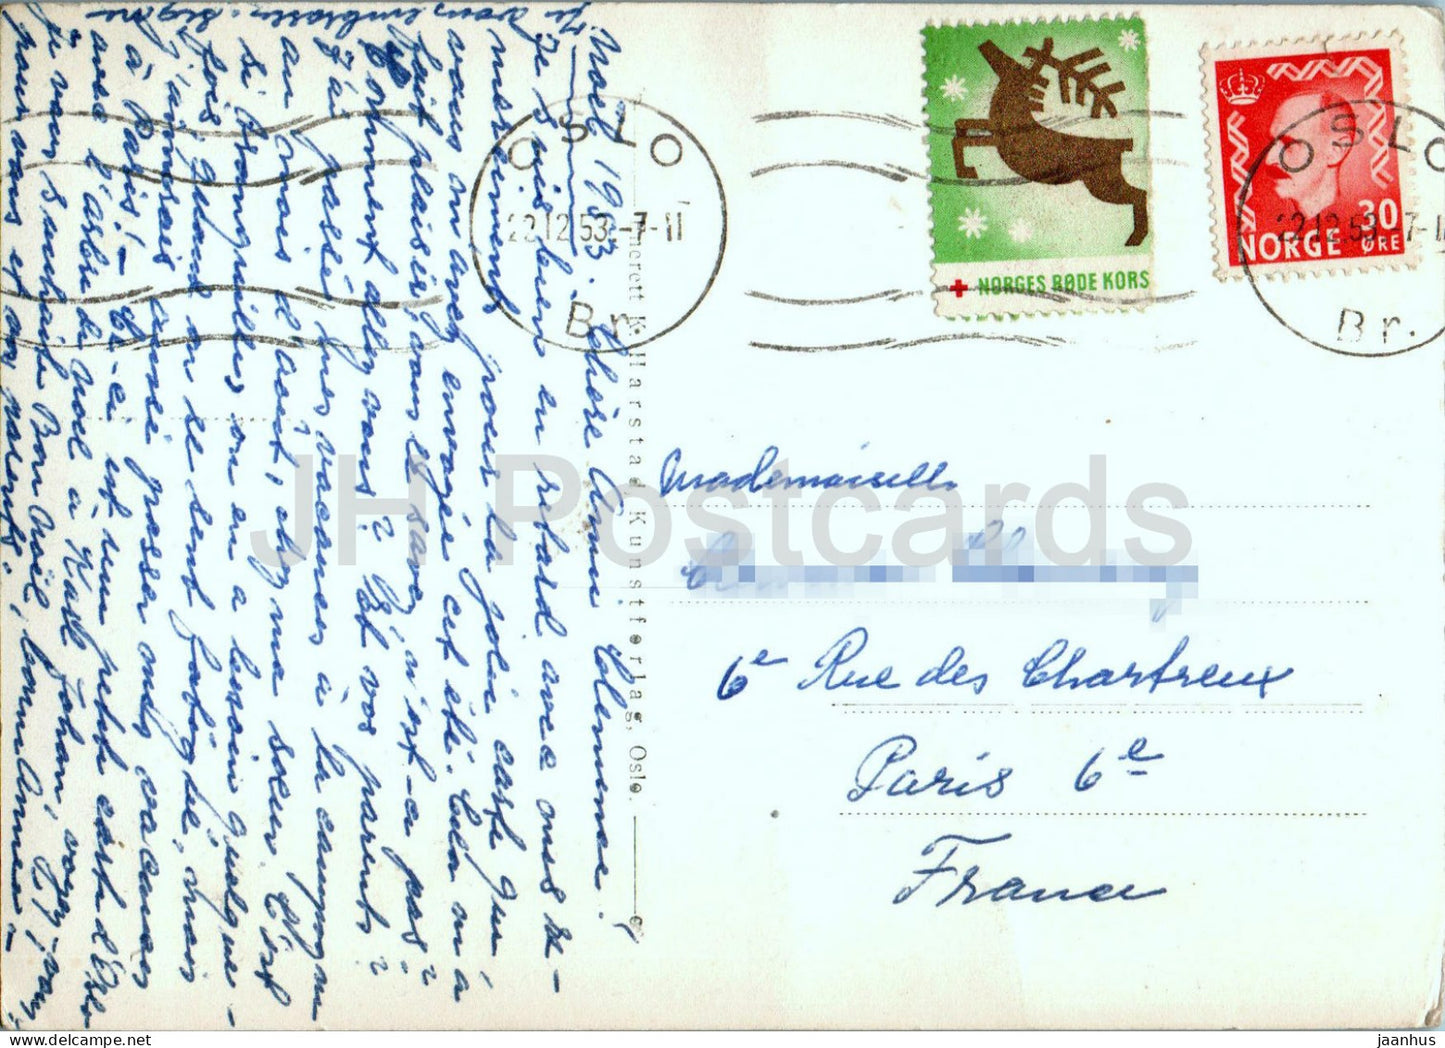 Hilsen fra Oslo - salutation d'Oslo - multiview - carte postale ancienne - 1953 - Norvège - utilisé 